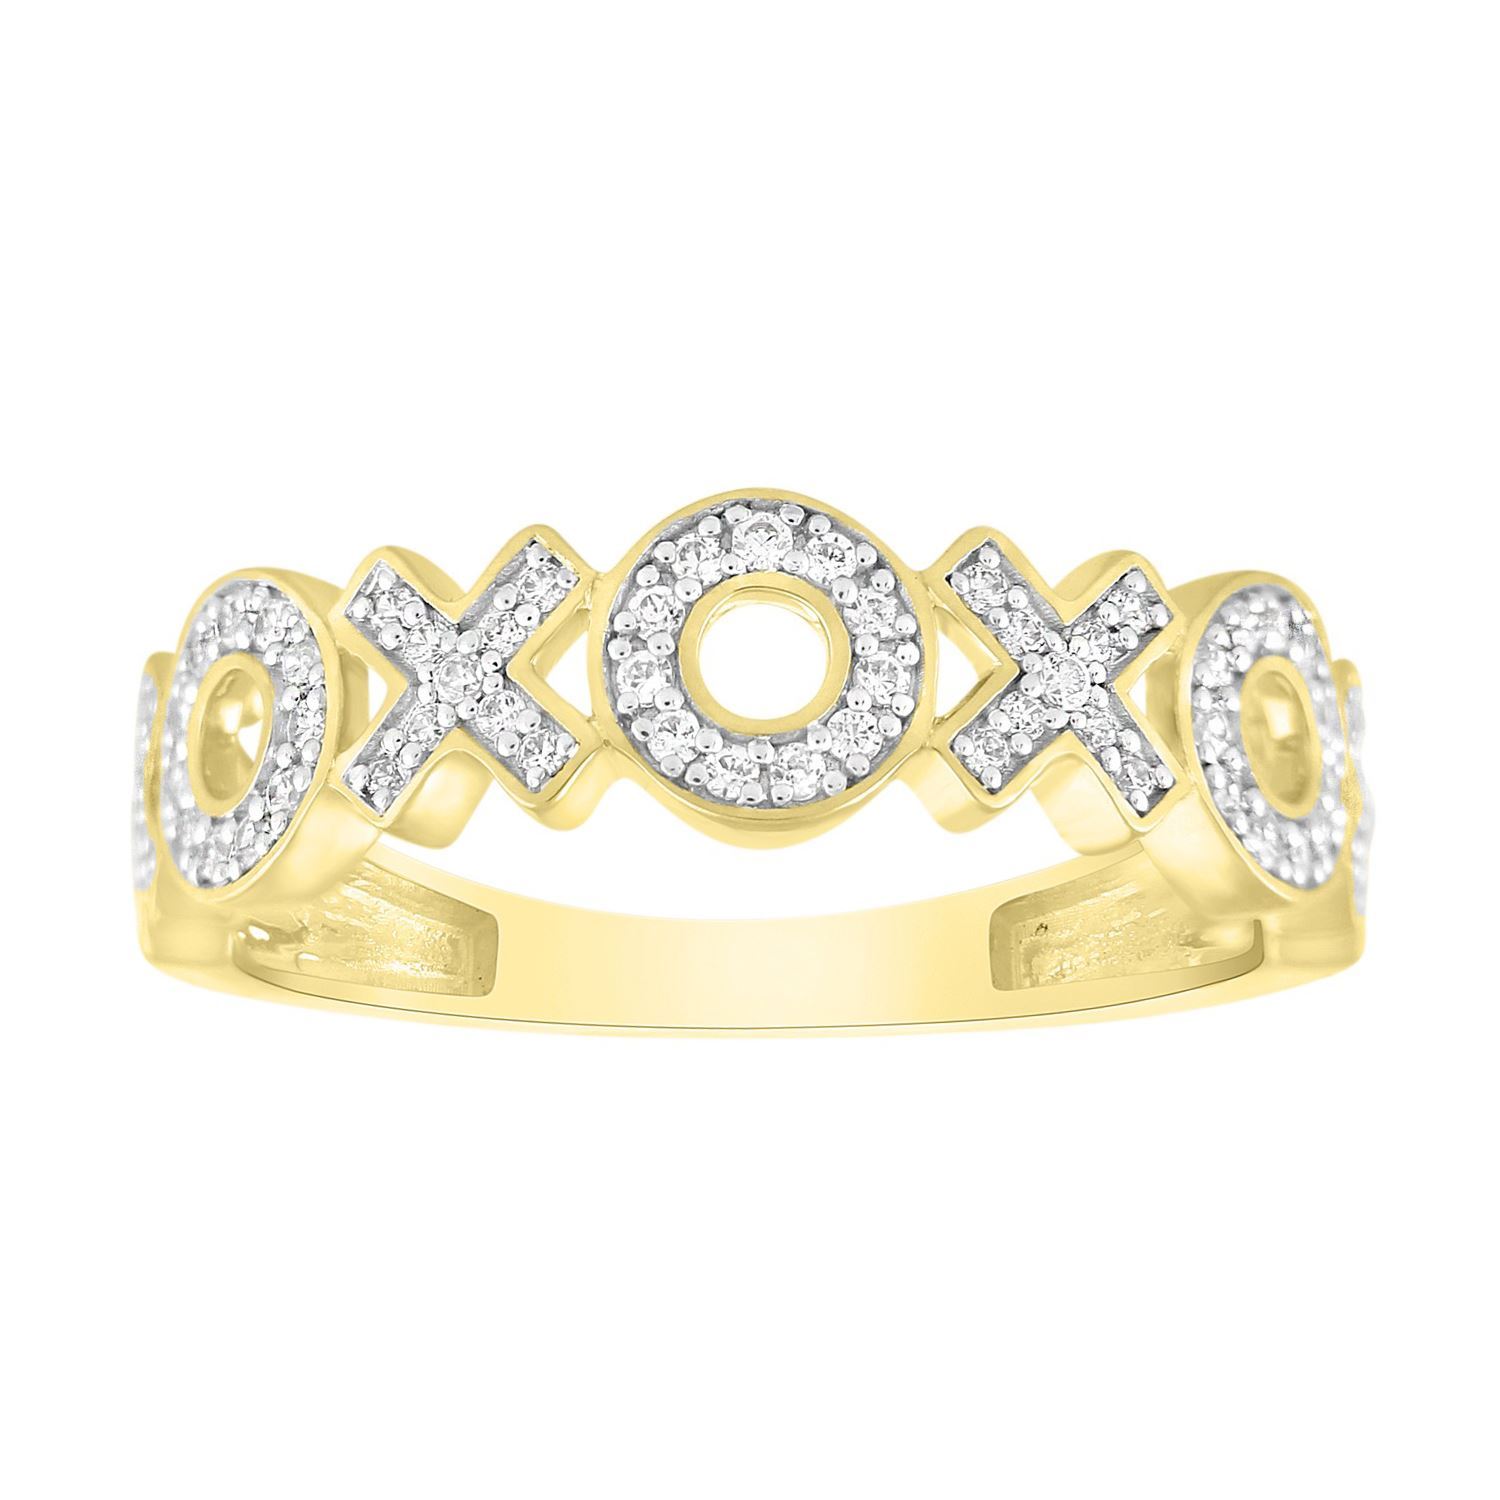 0012841_ladies-ring-14-ct-round-diamond-10k-yellow-gold.jpeg